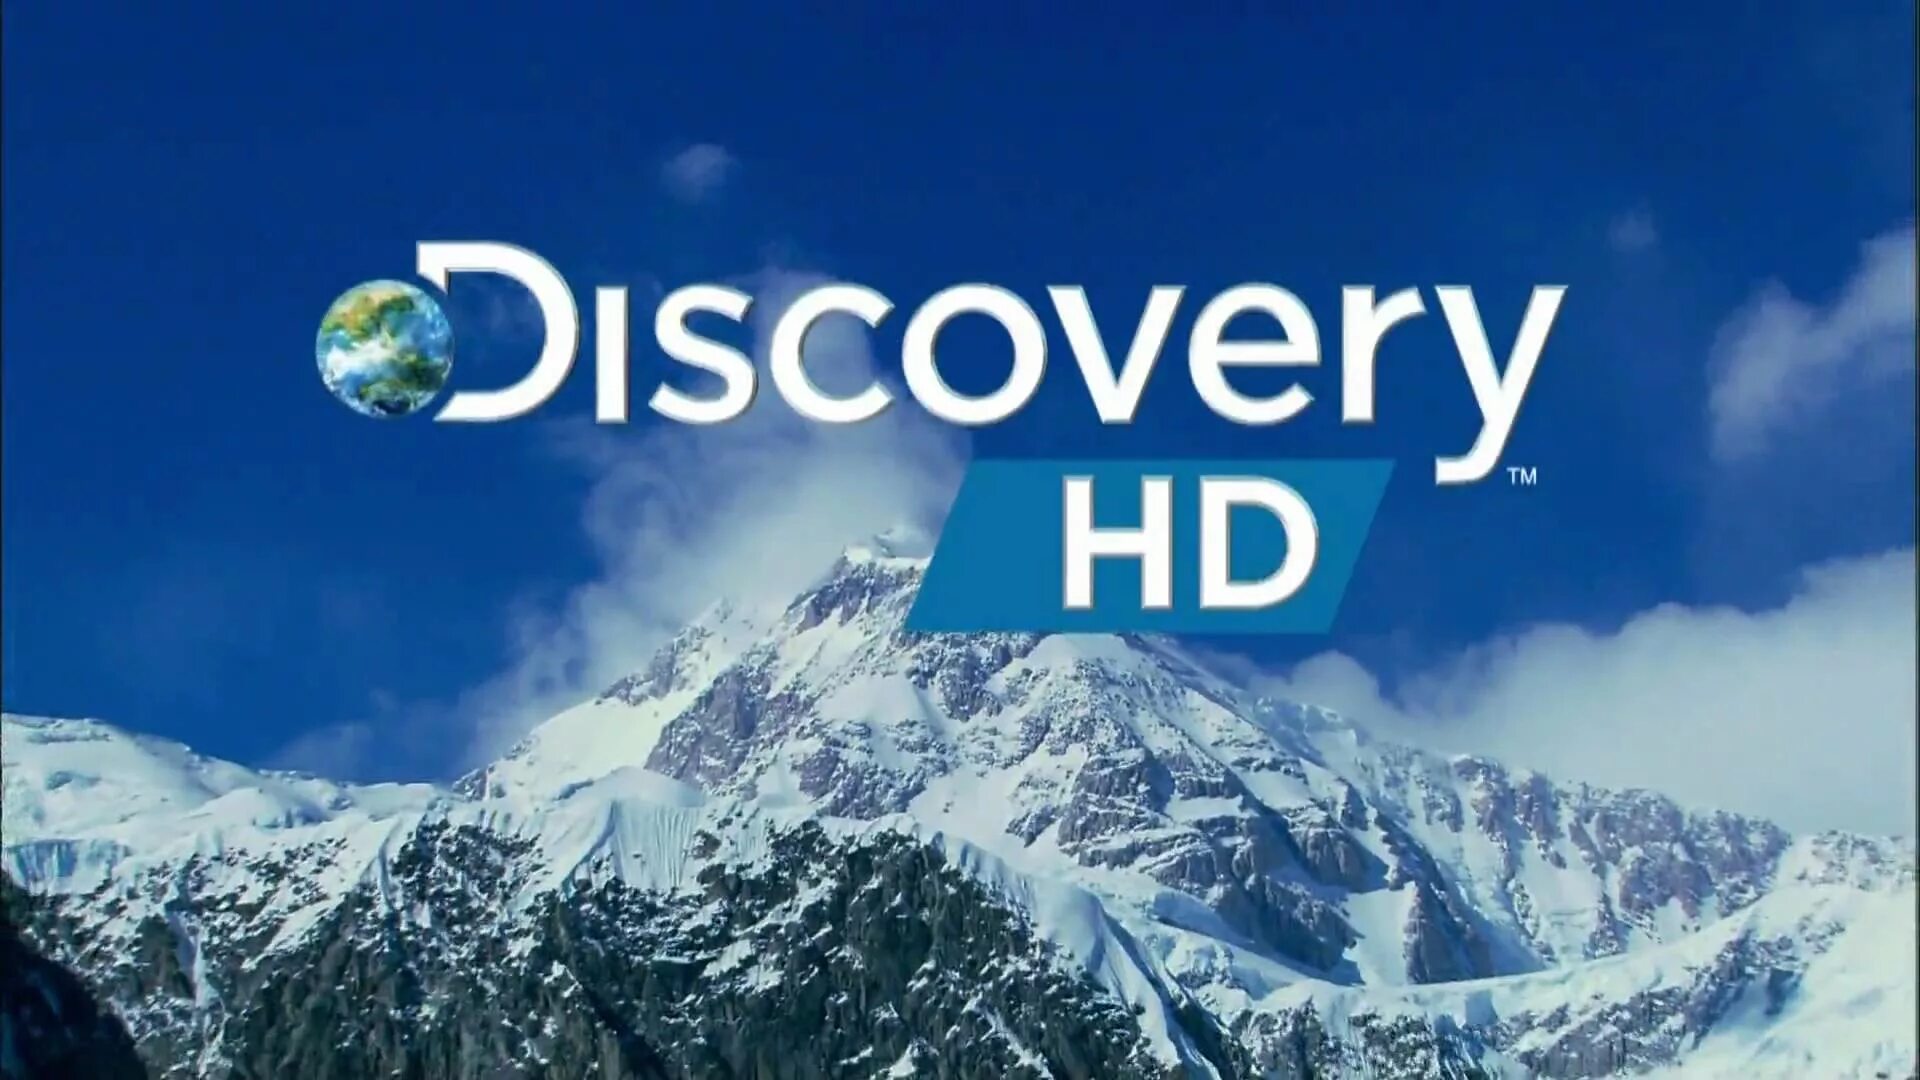 Discovery channel. Телеканал Discovery. Дискавери логотип. Дискавери заставка. Передачи канала дискавери